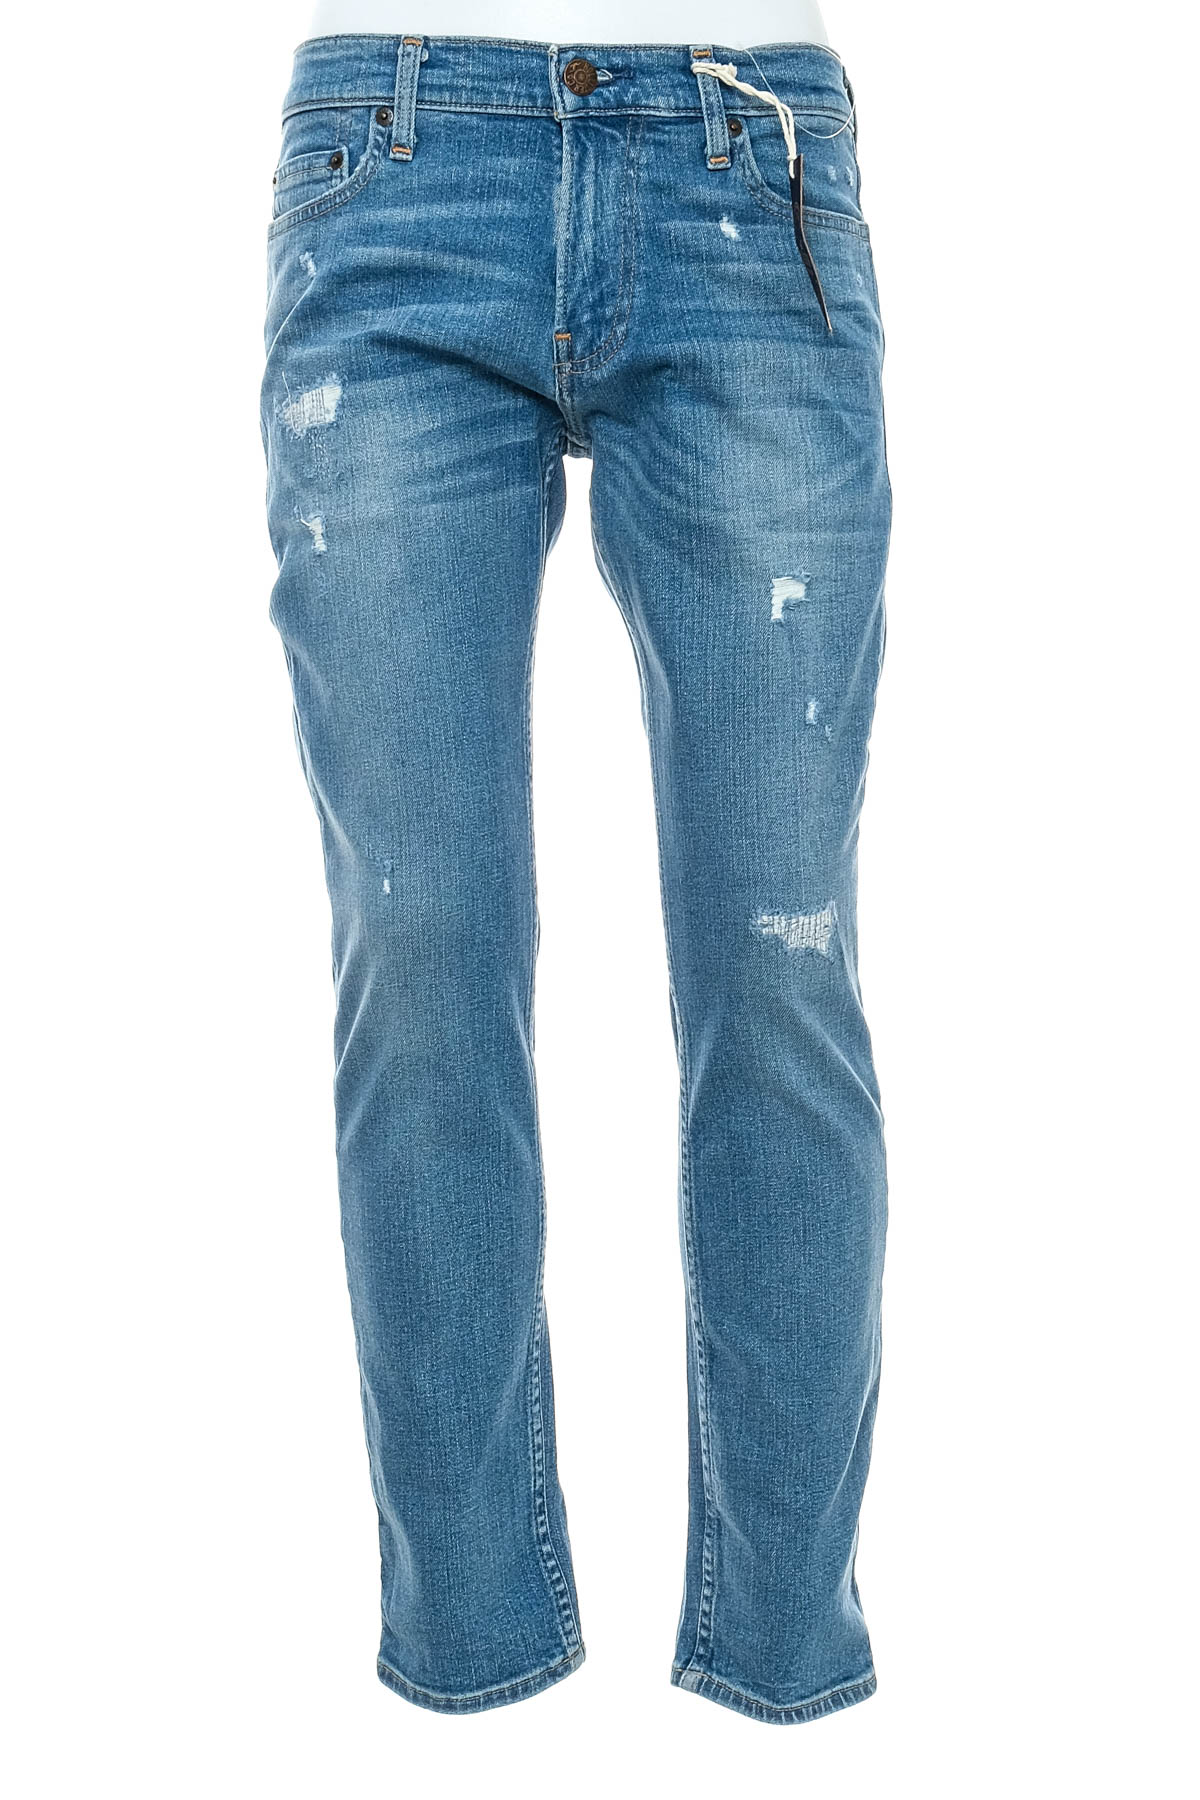 Men's jeans - HOLLISTER - 0